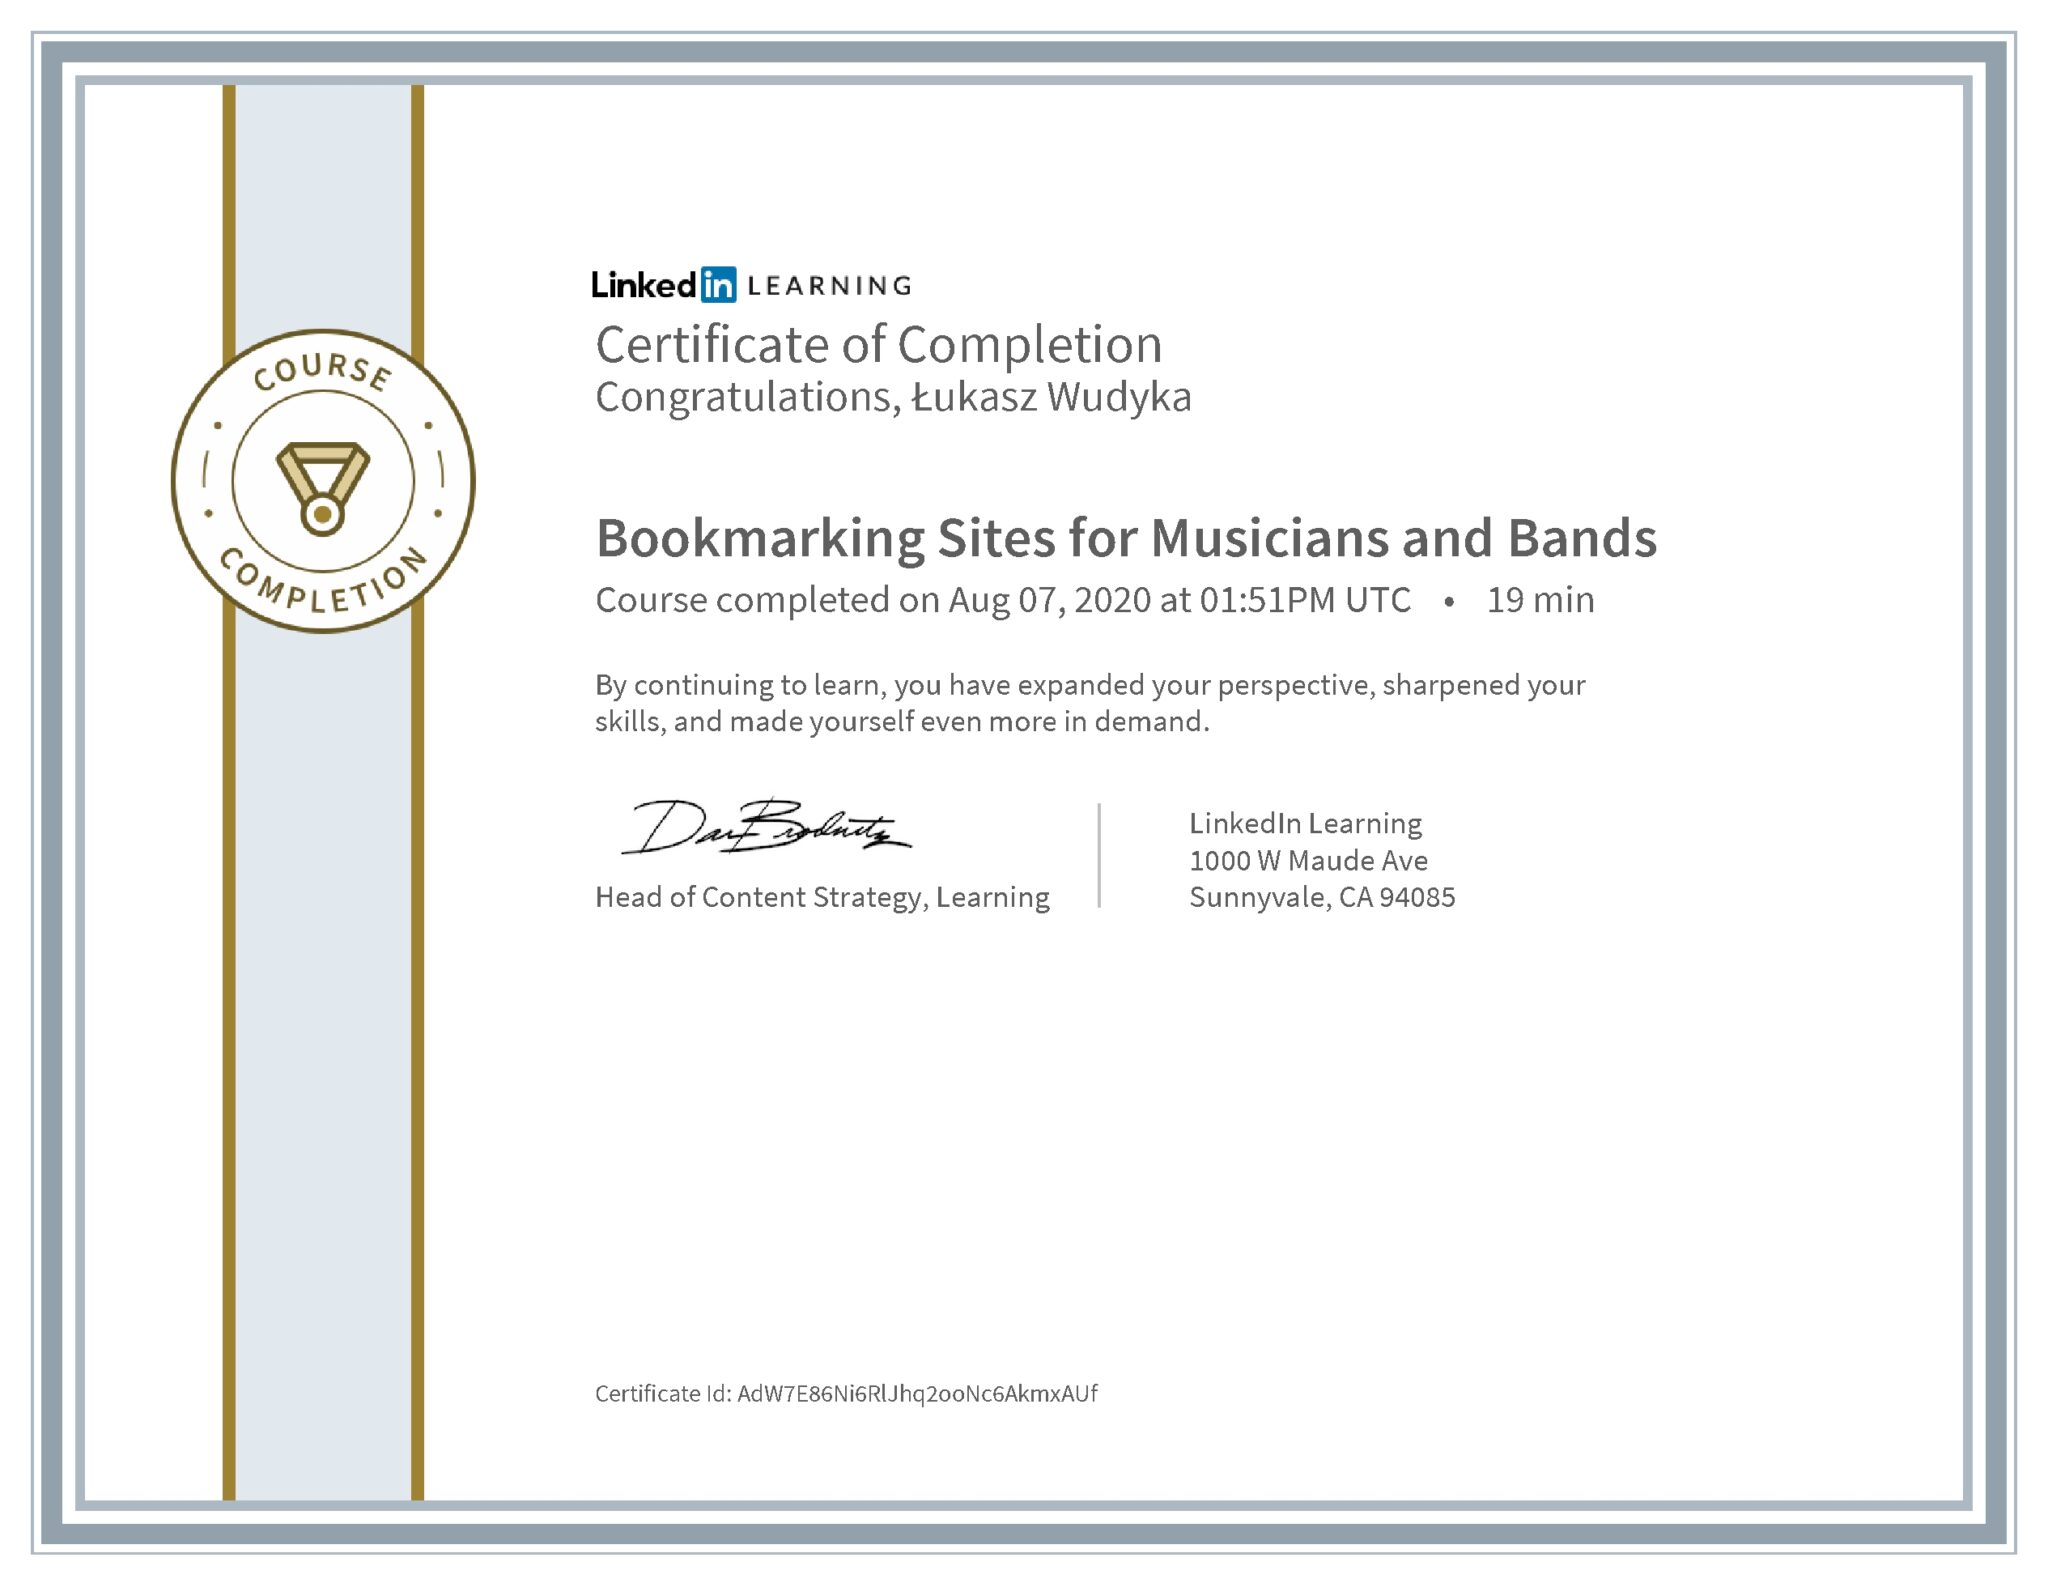 Łukasz Wudyka certyfikat LinkedIn Bookmarking Sites for Musicians and Bands